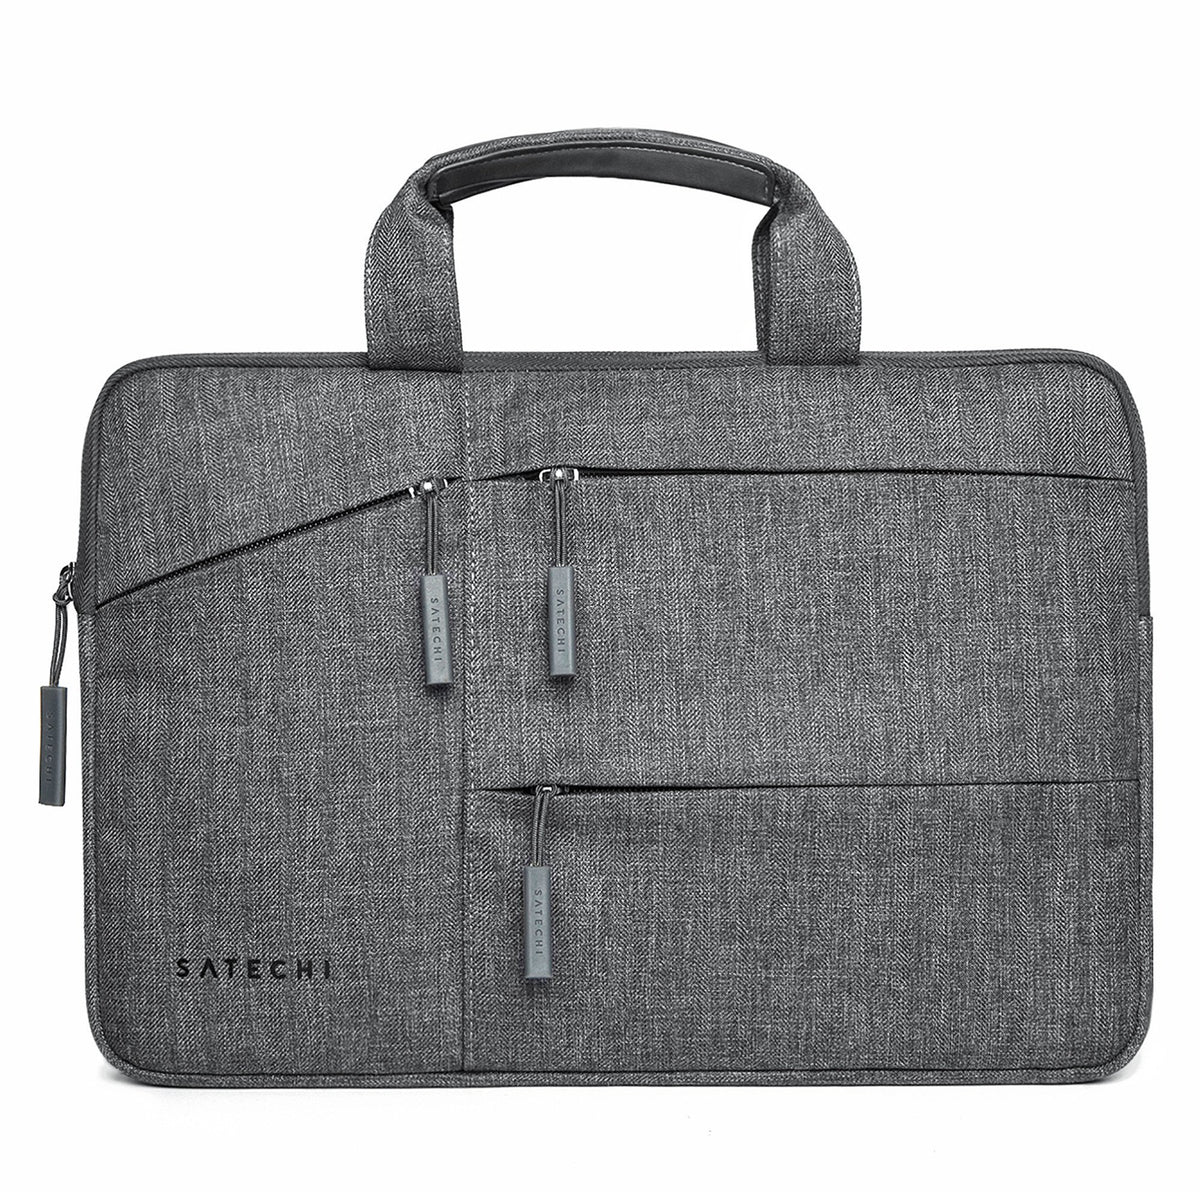 Satechi Laptop Carrying Bag